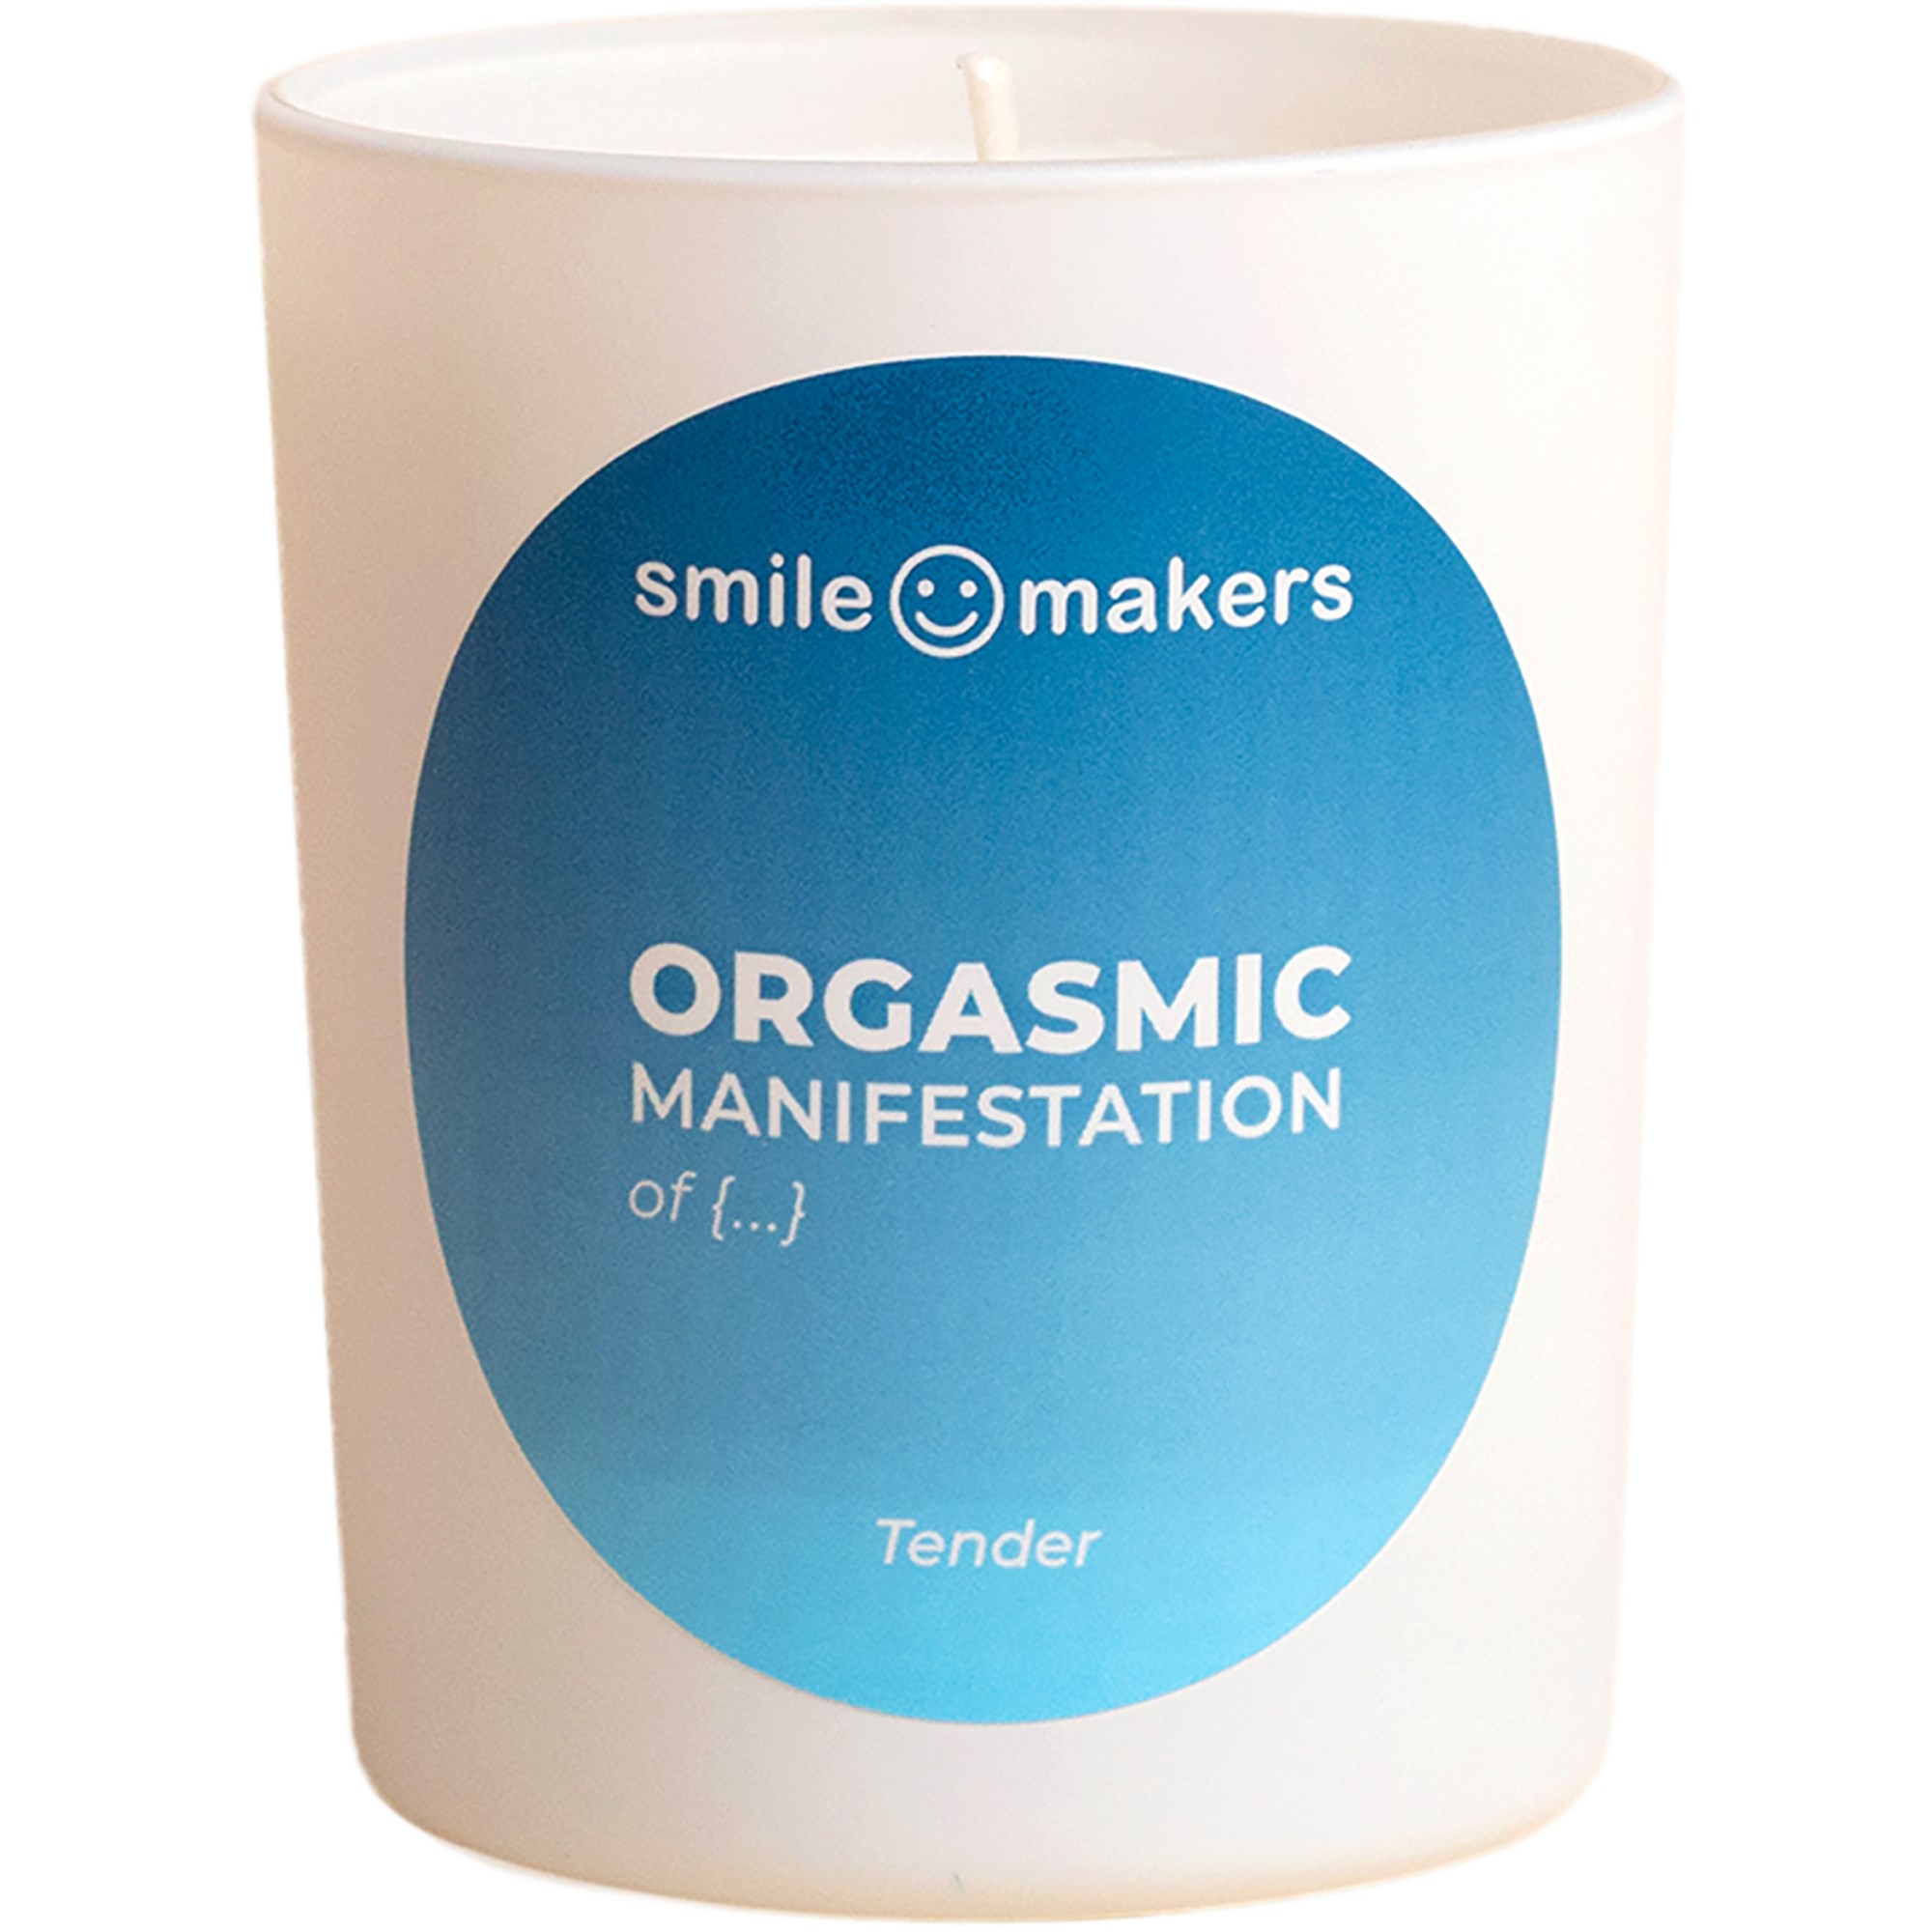 Smile Makers Sensorial Play Orgasmic Manifestation of Tender 450